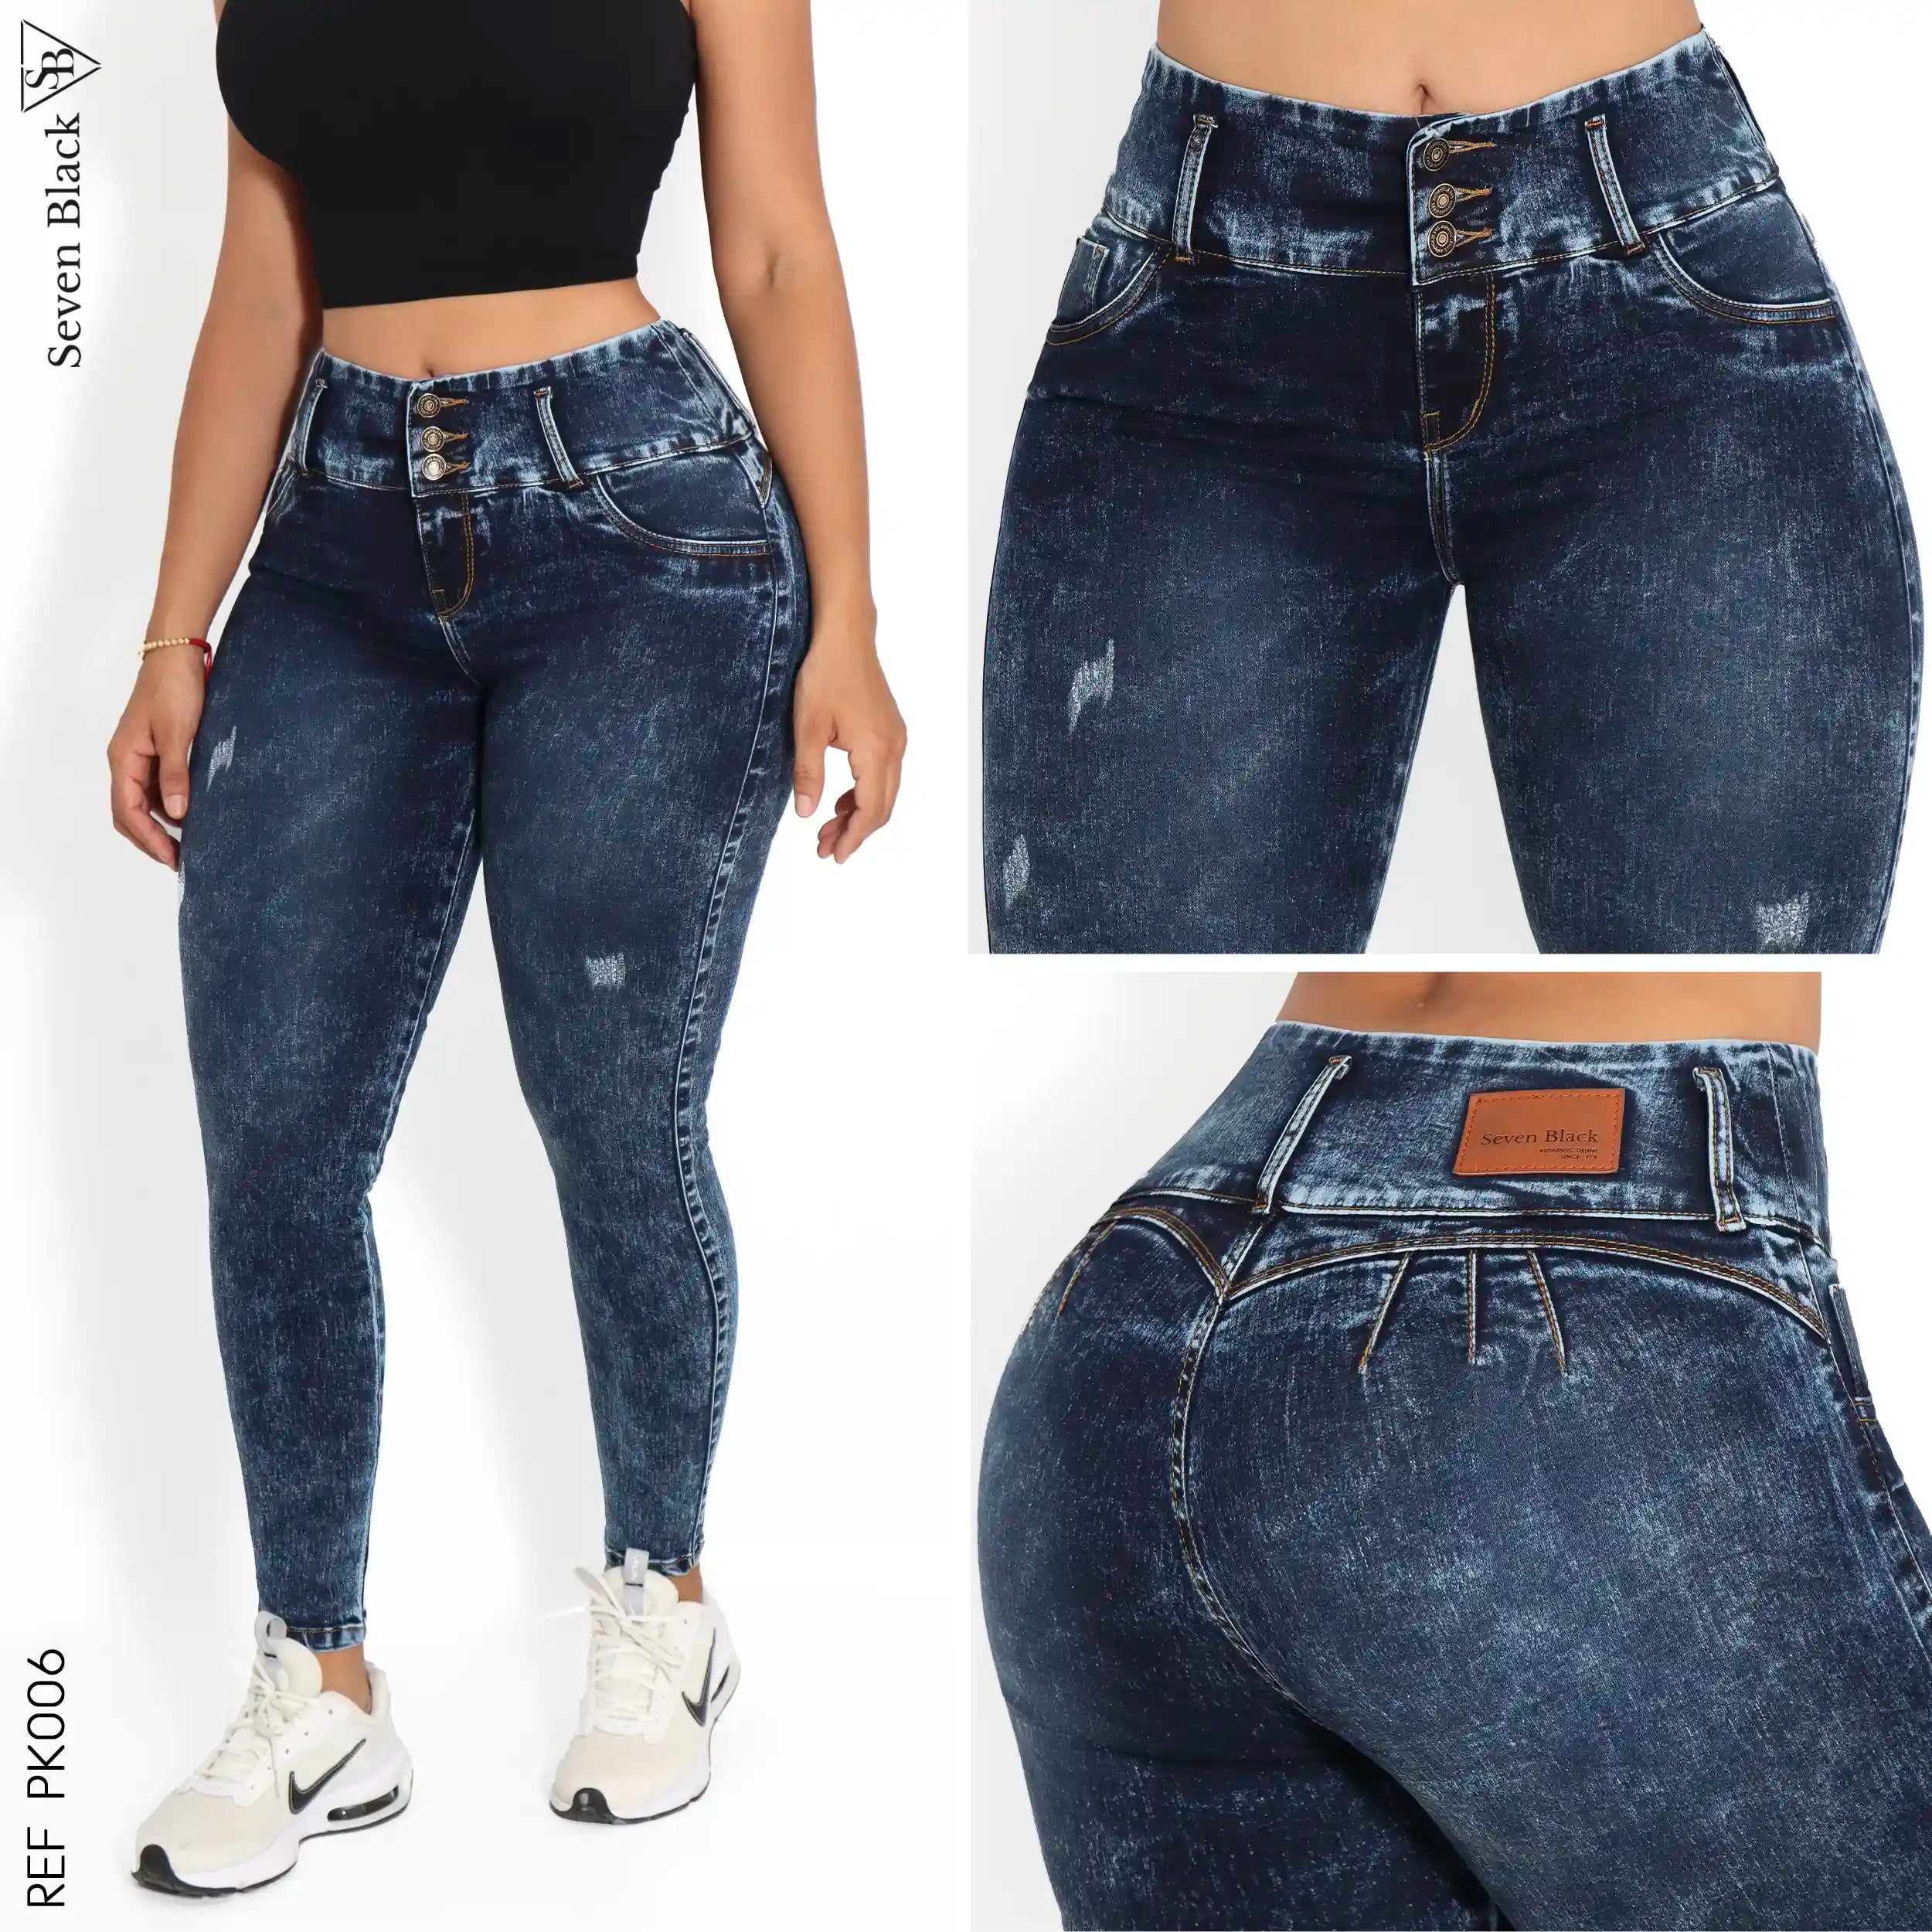 Jeans Mujer Pretina Ancha Oscuro PK006 – Guethe08